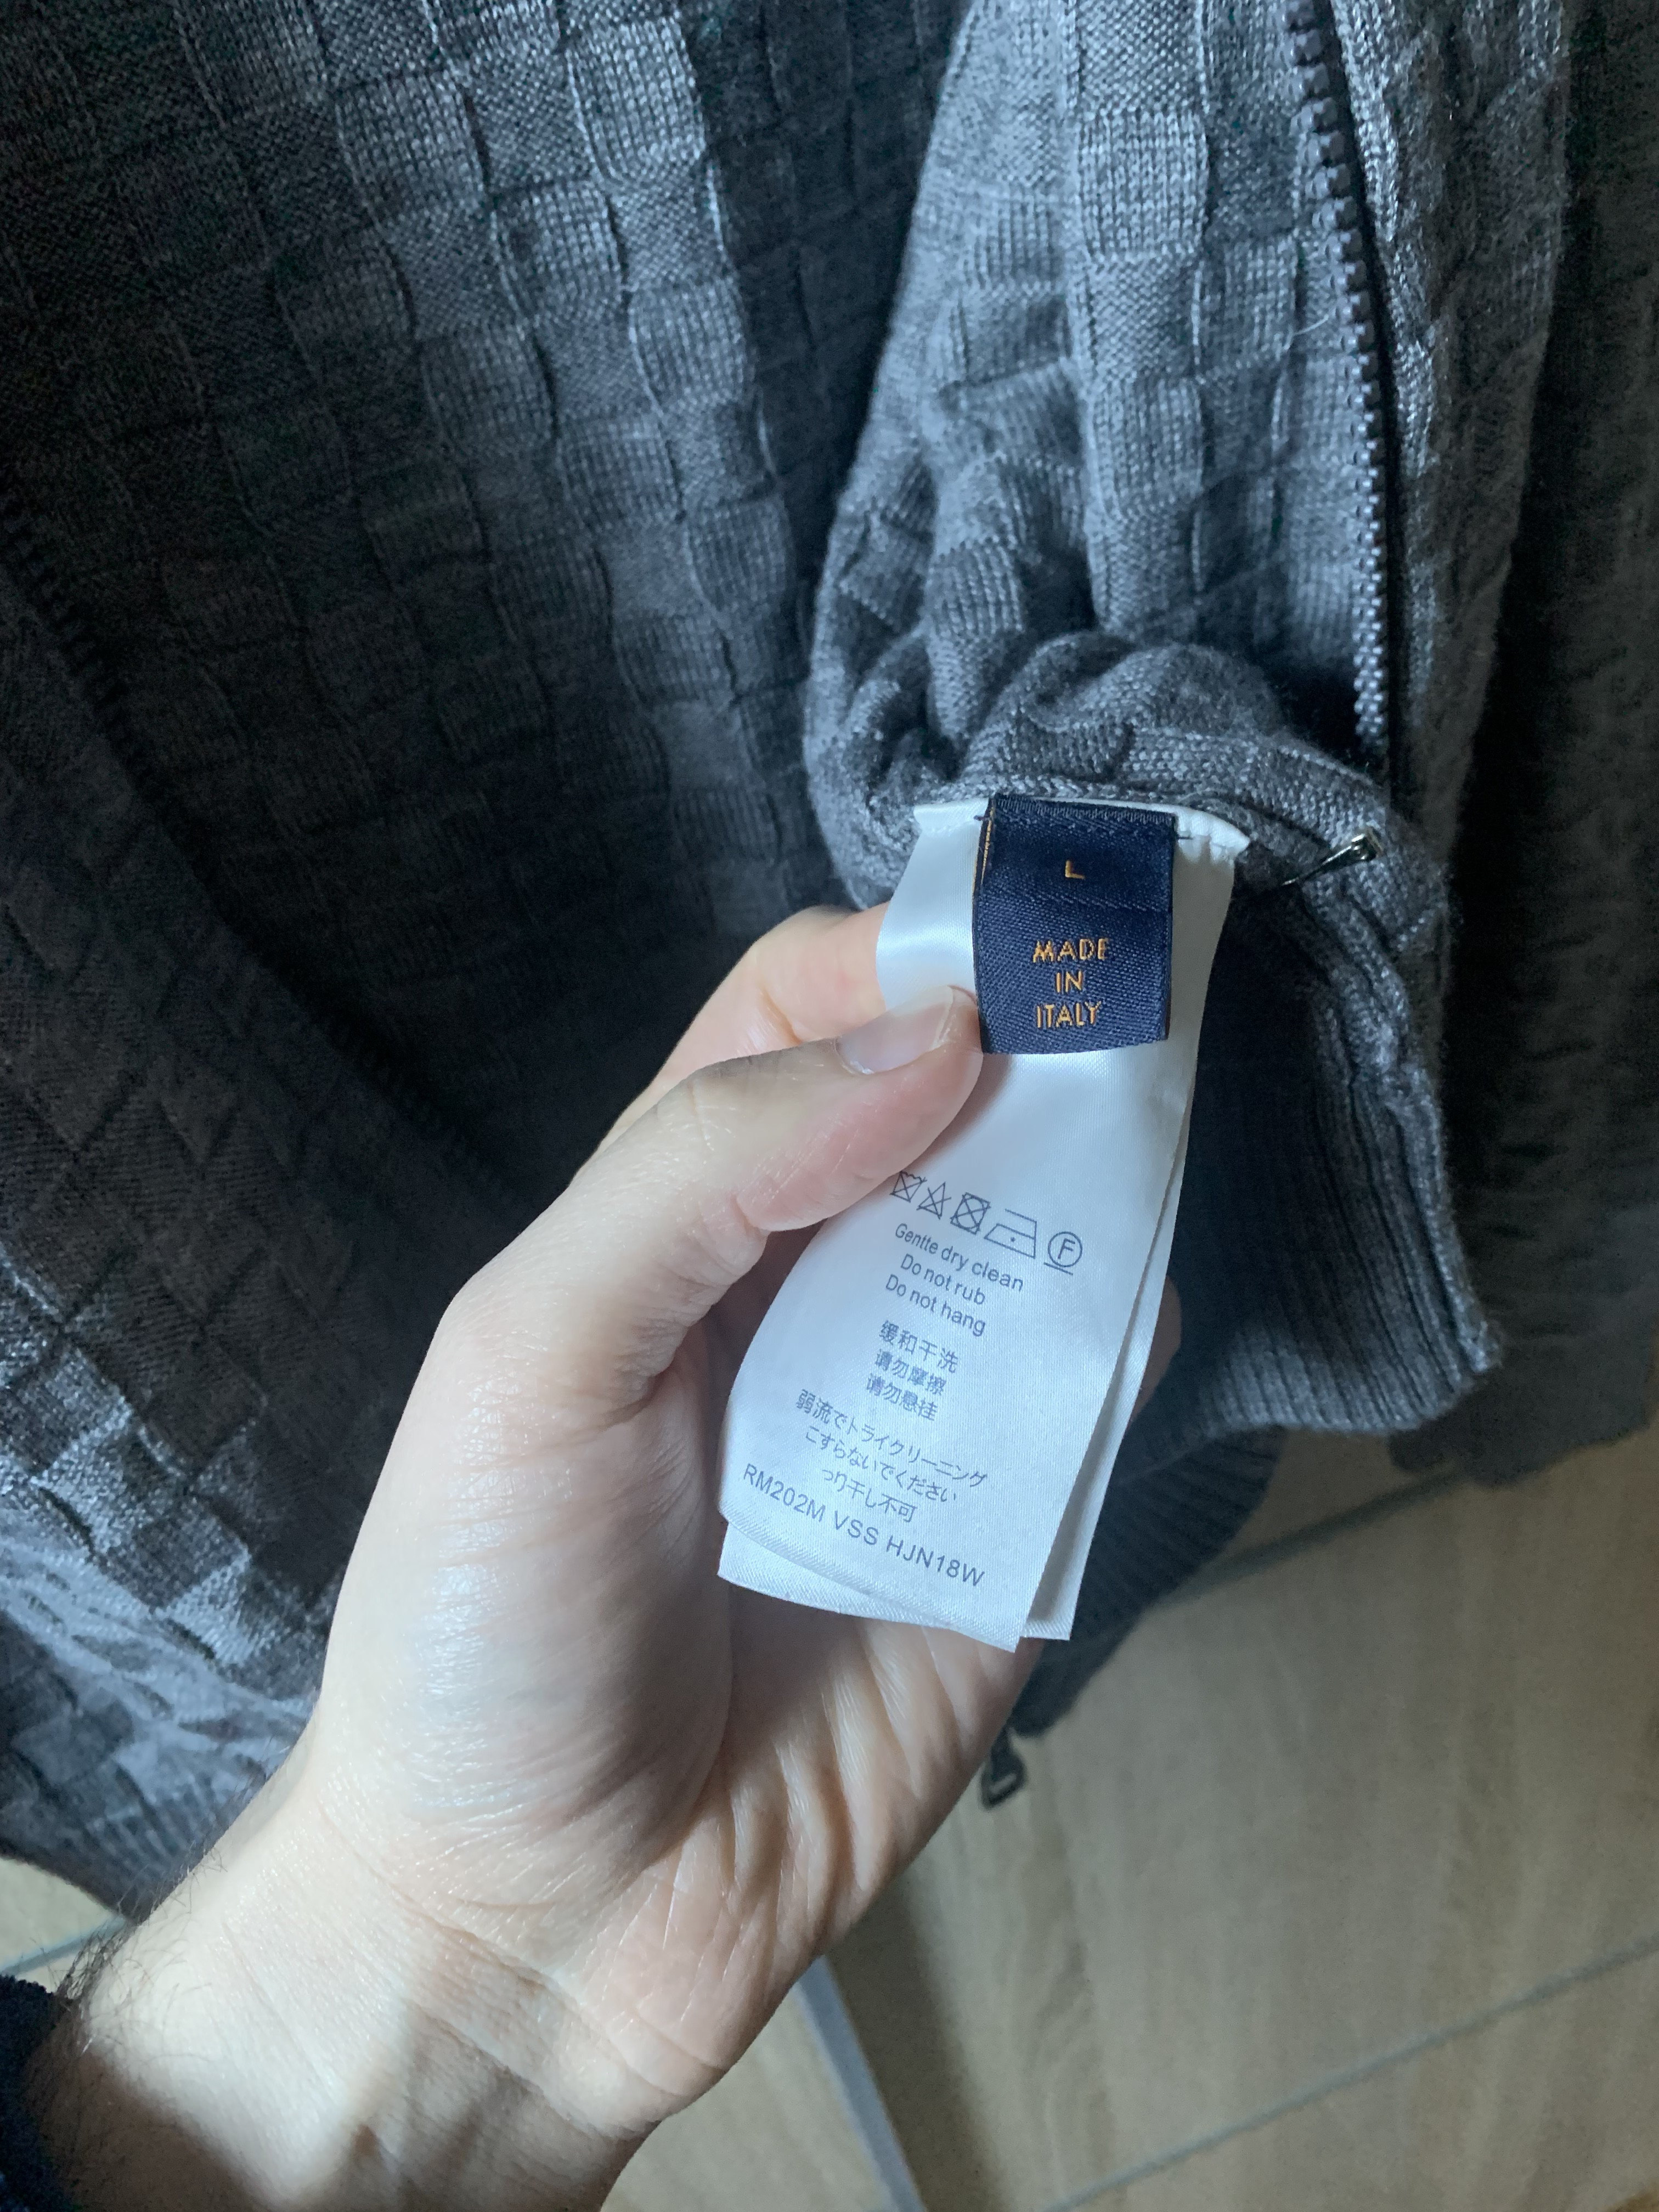 Louis Vuitton Damier Signature Zip-through Cardigan Navy Excellent (Me –  Unknown Seller